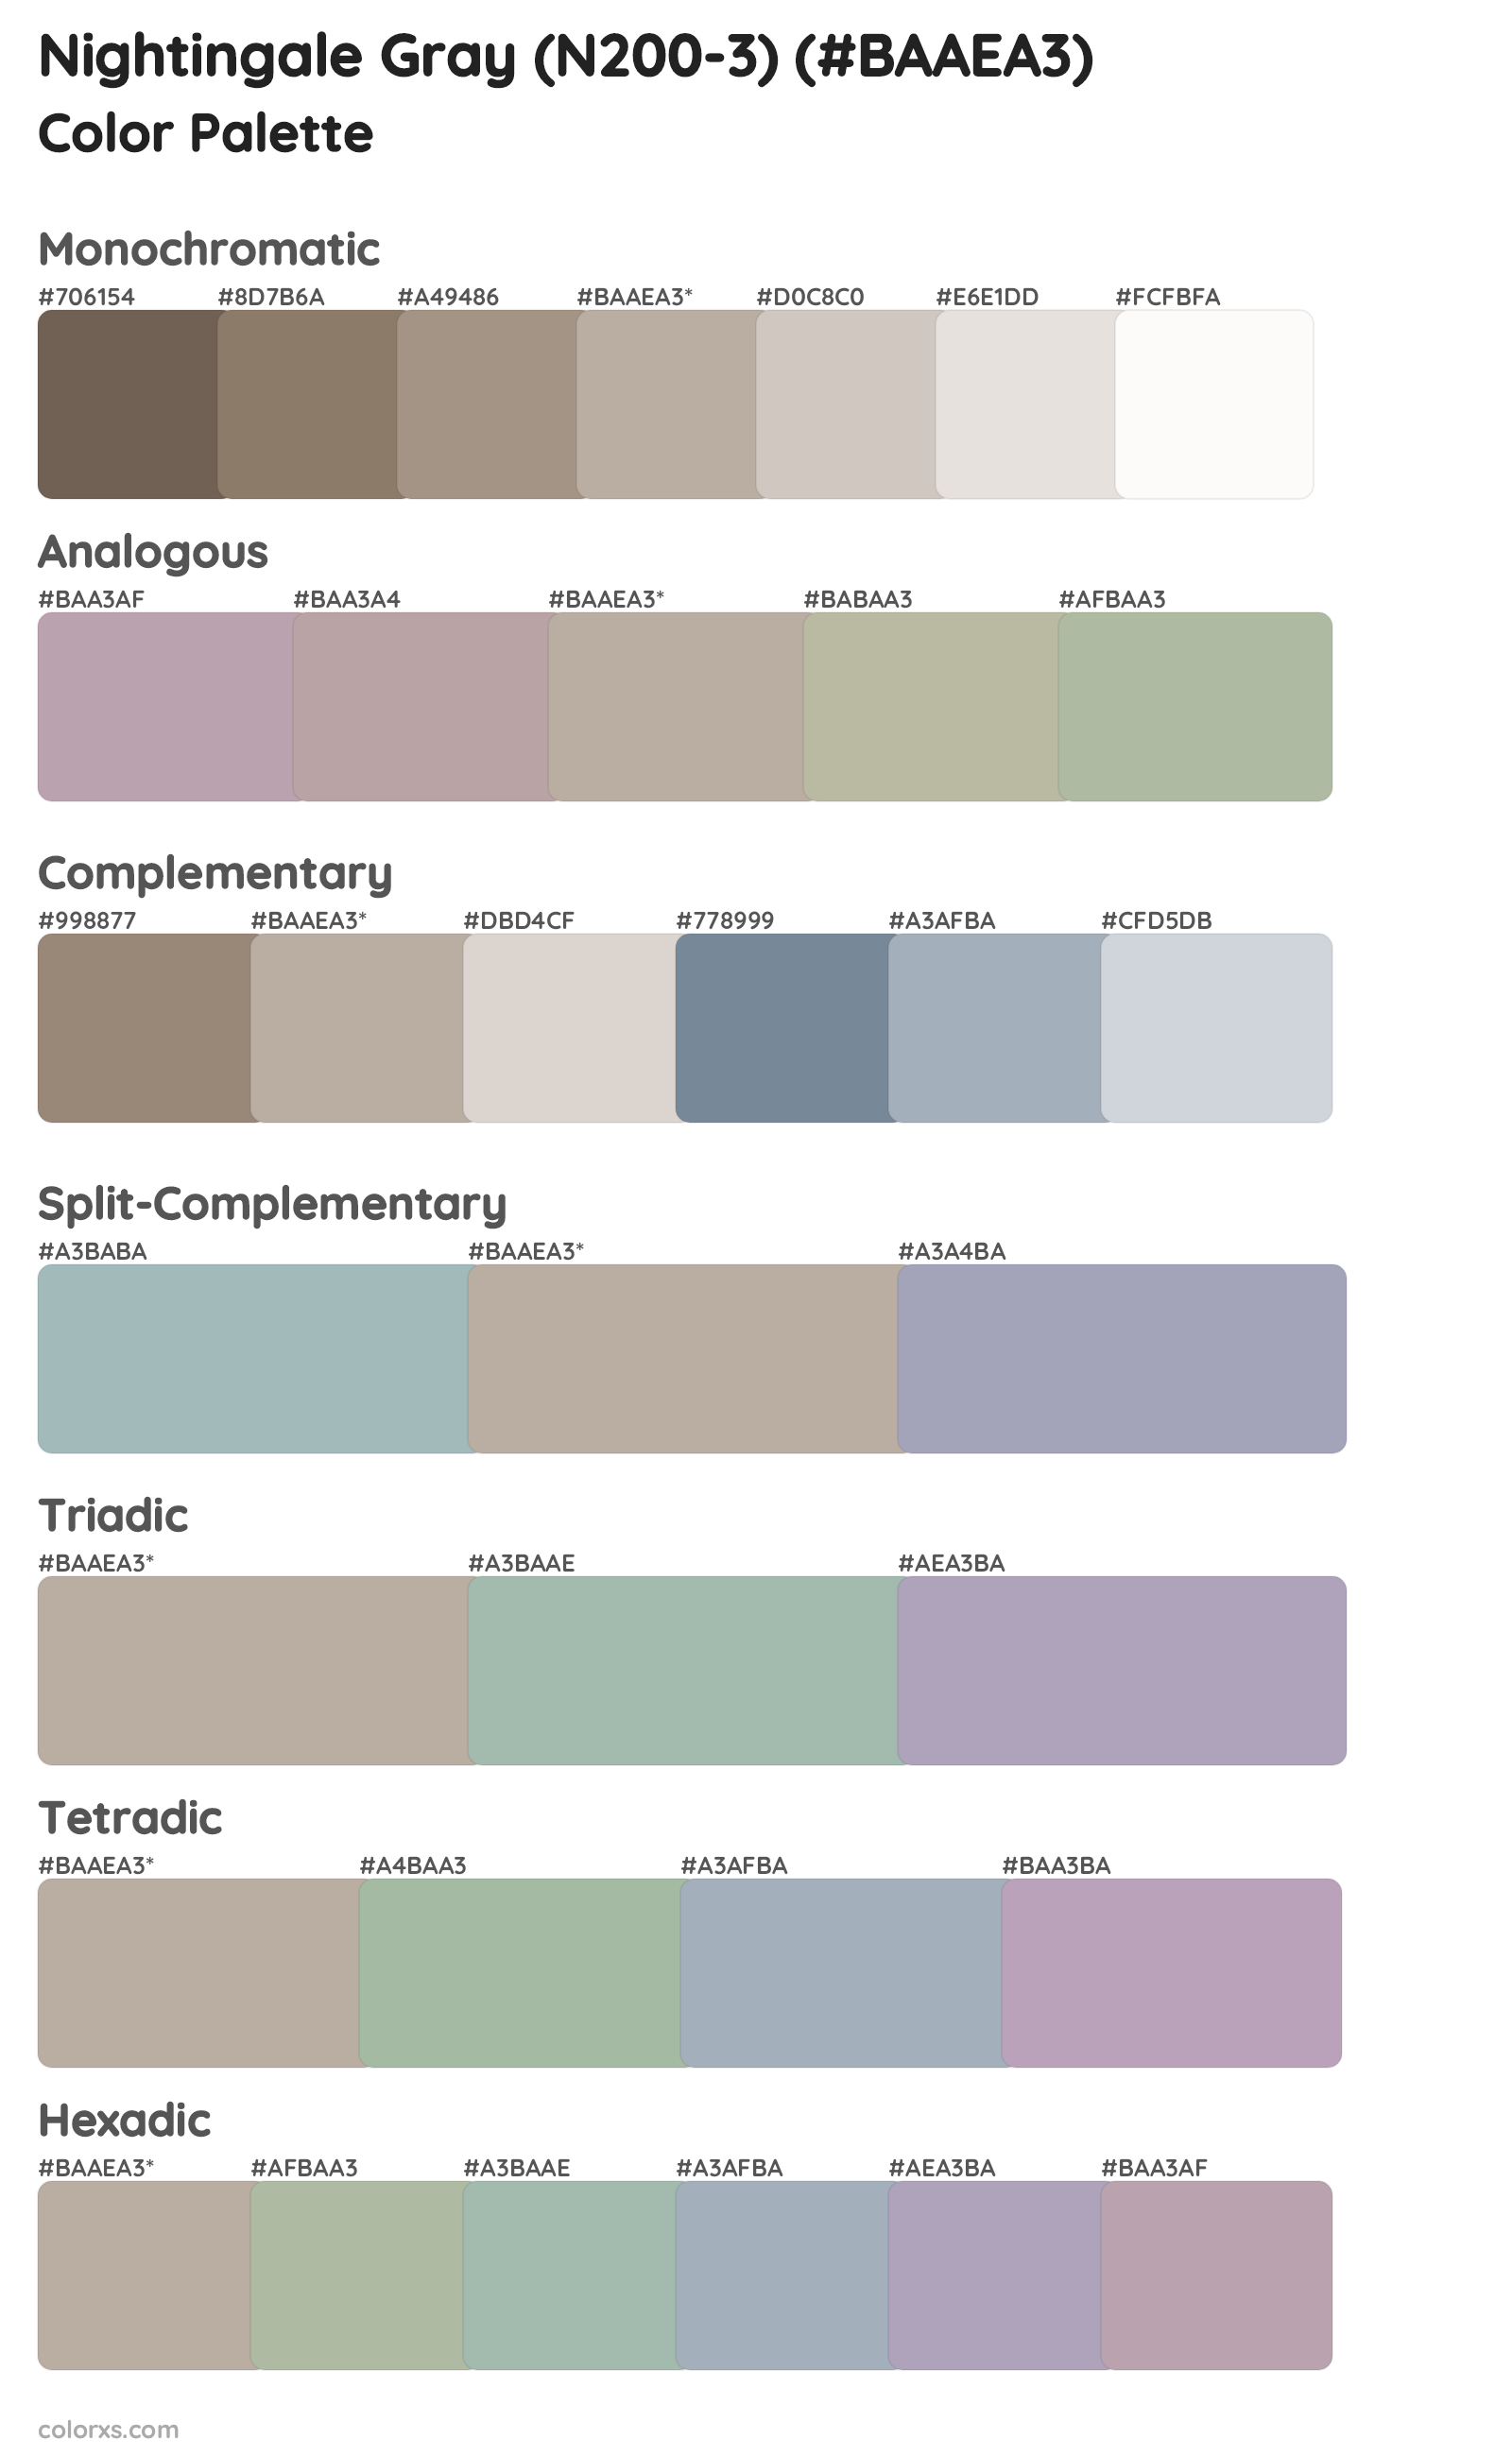 Nightingale Gray (N200-3) Color Scheme Palettes